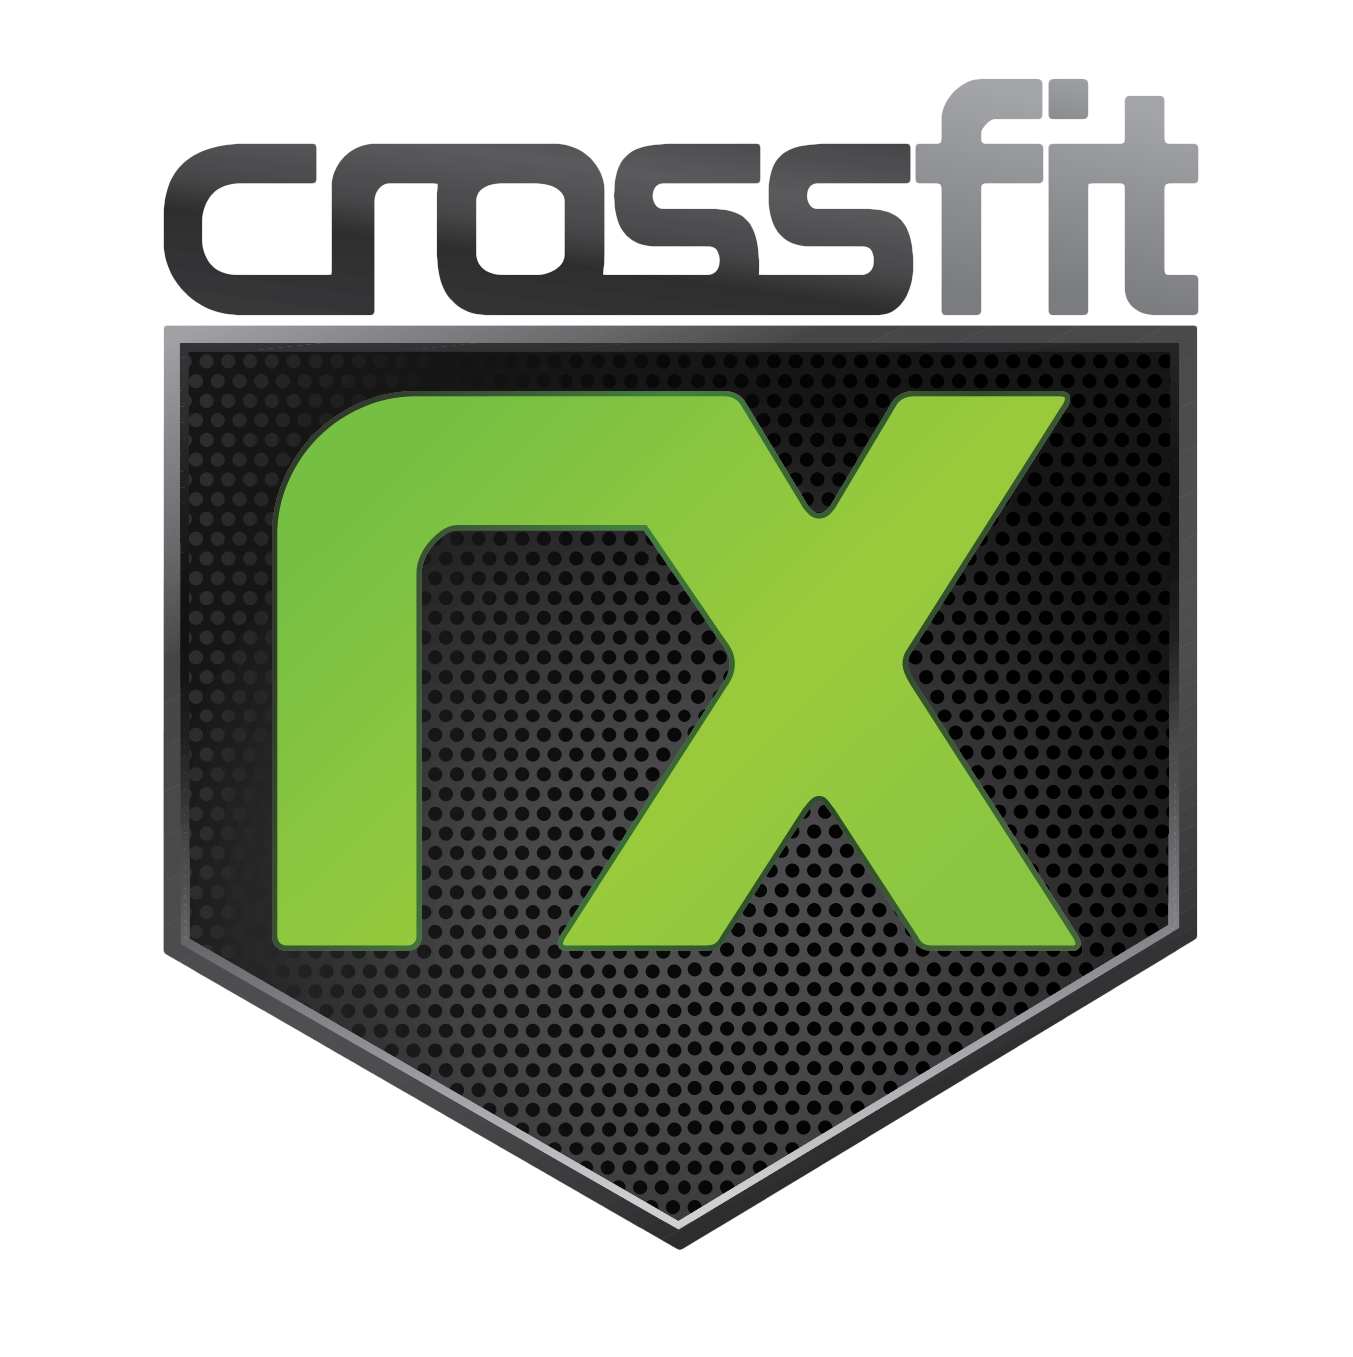 CrossFit Rx